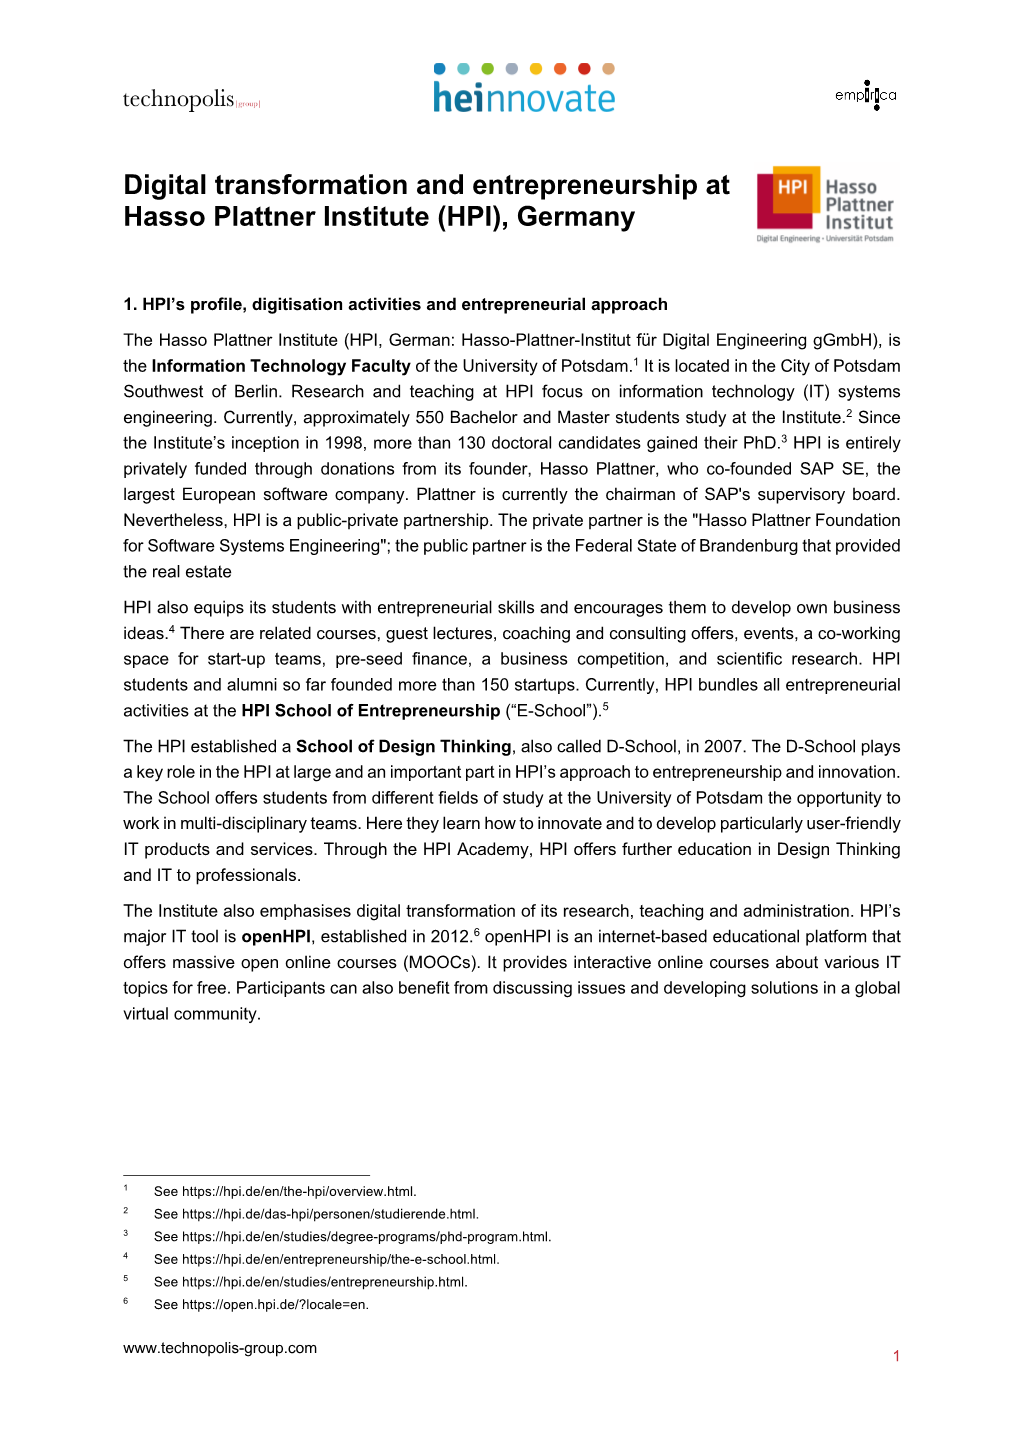 Digital Transformation and Entrepreneurship at Hasso Plattner Institute (HPI), Germany